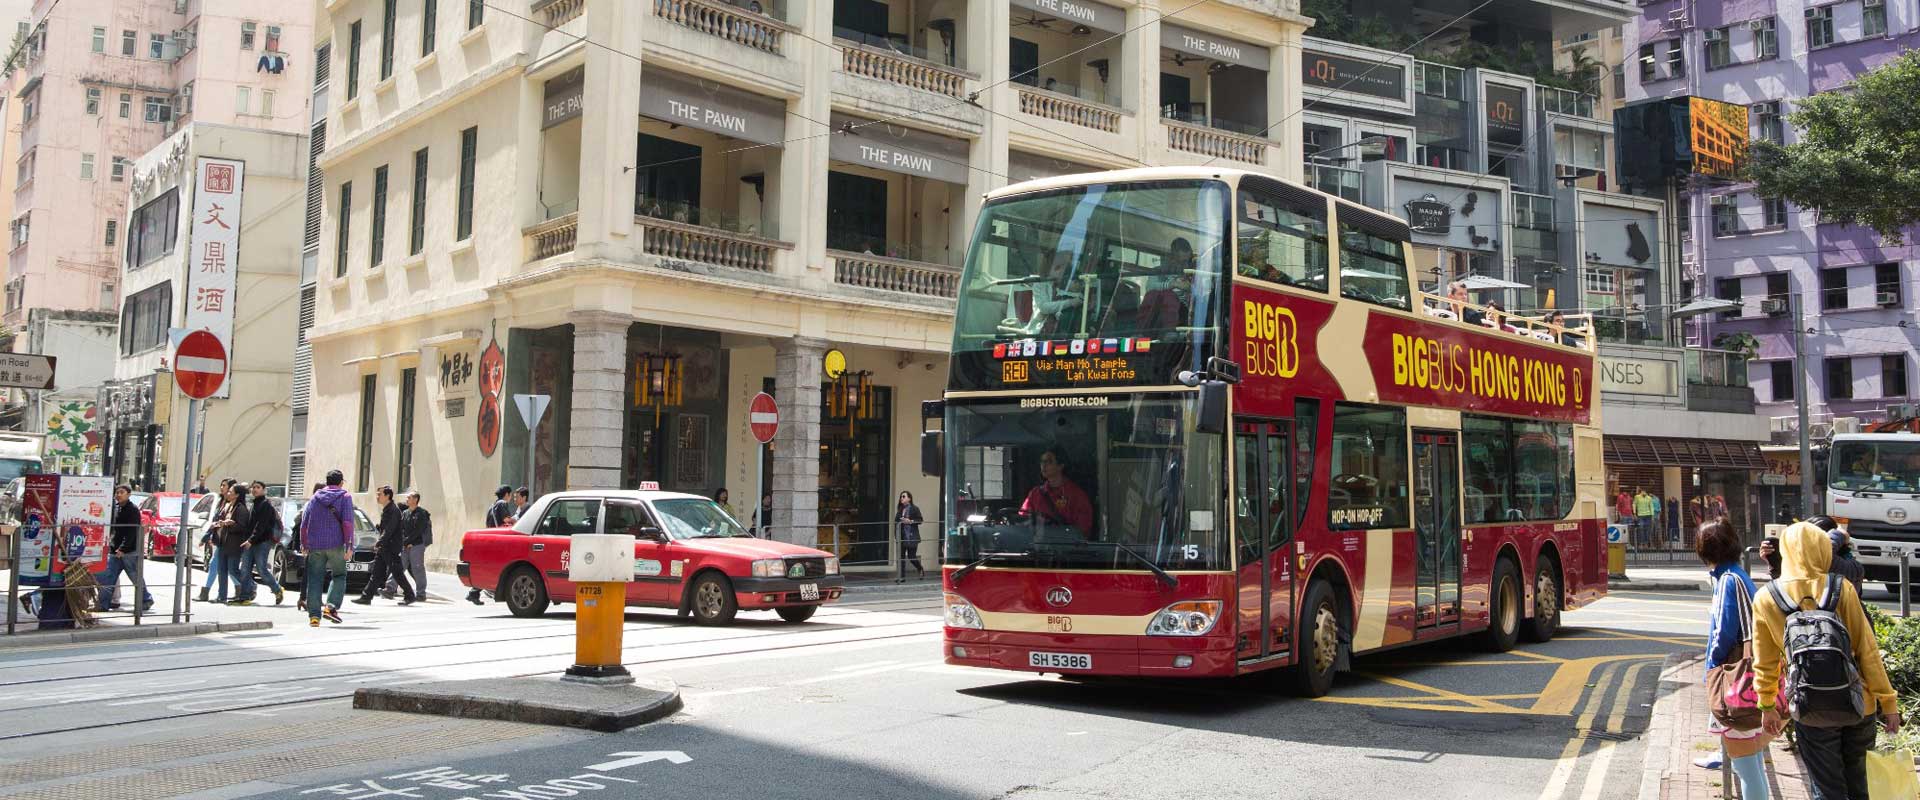 hong kong tourist bus